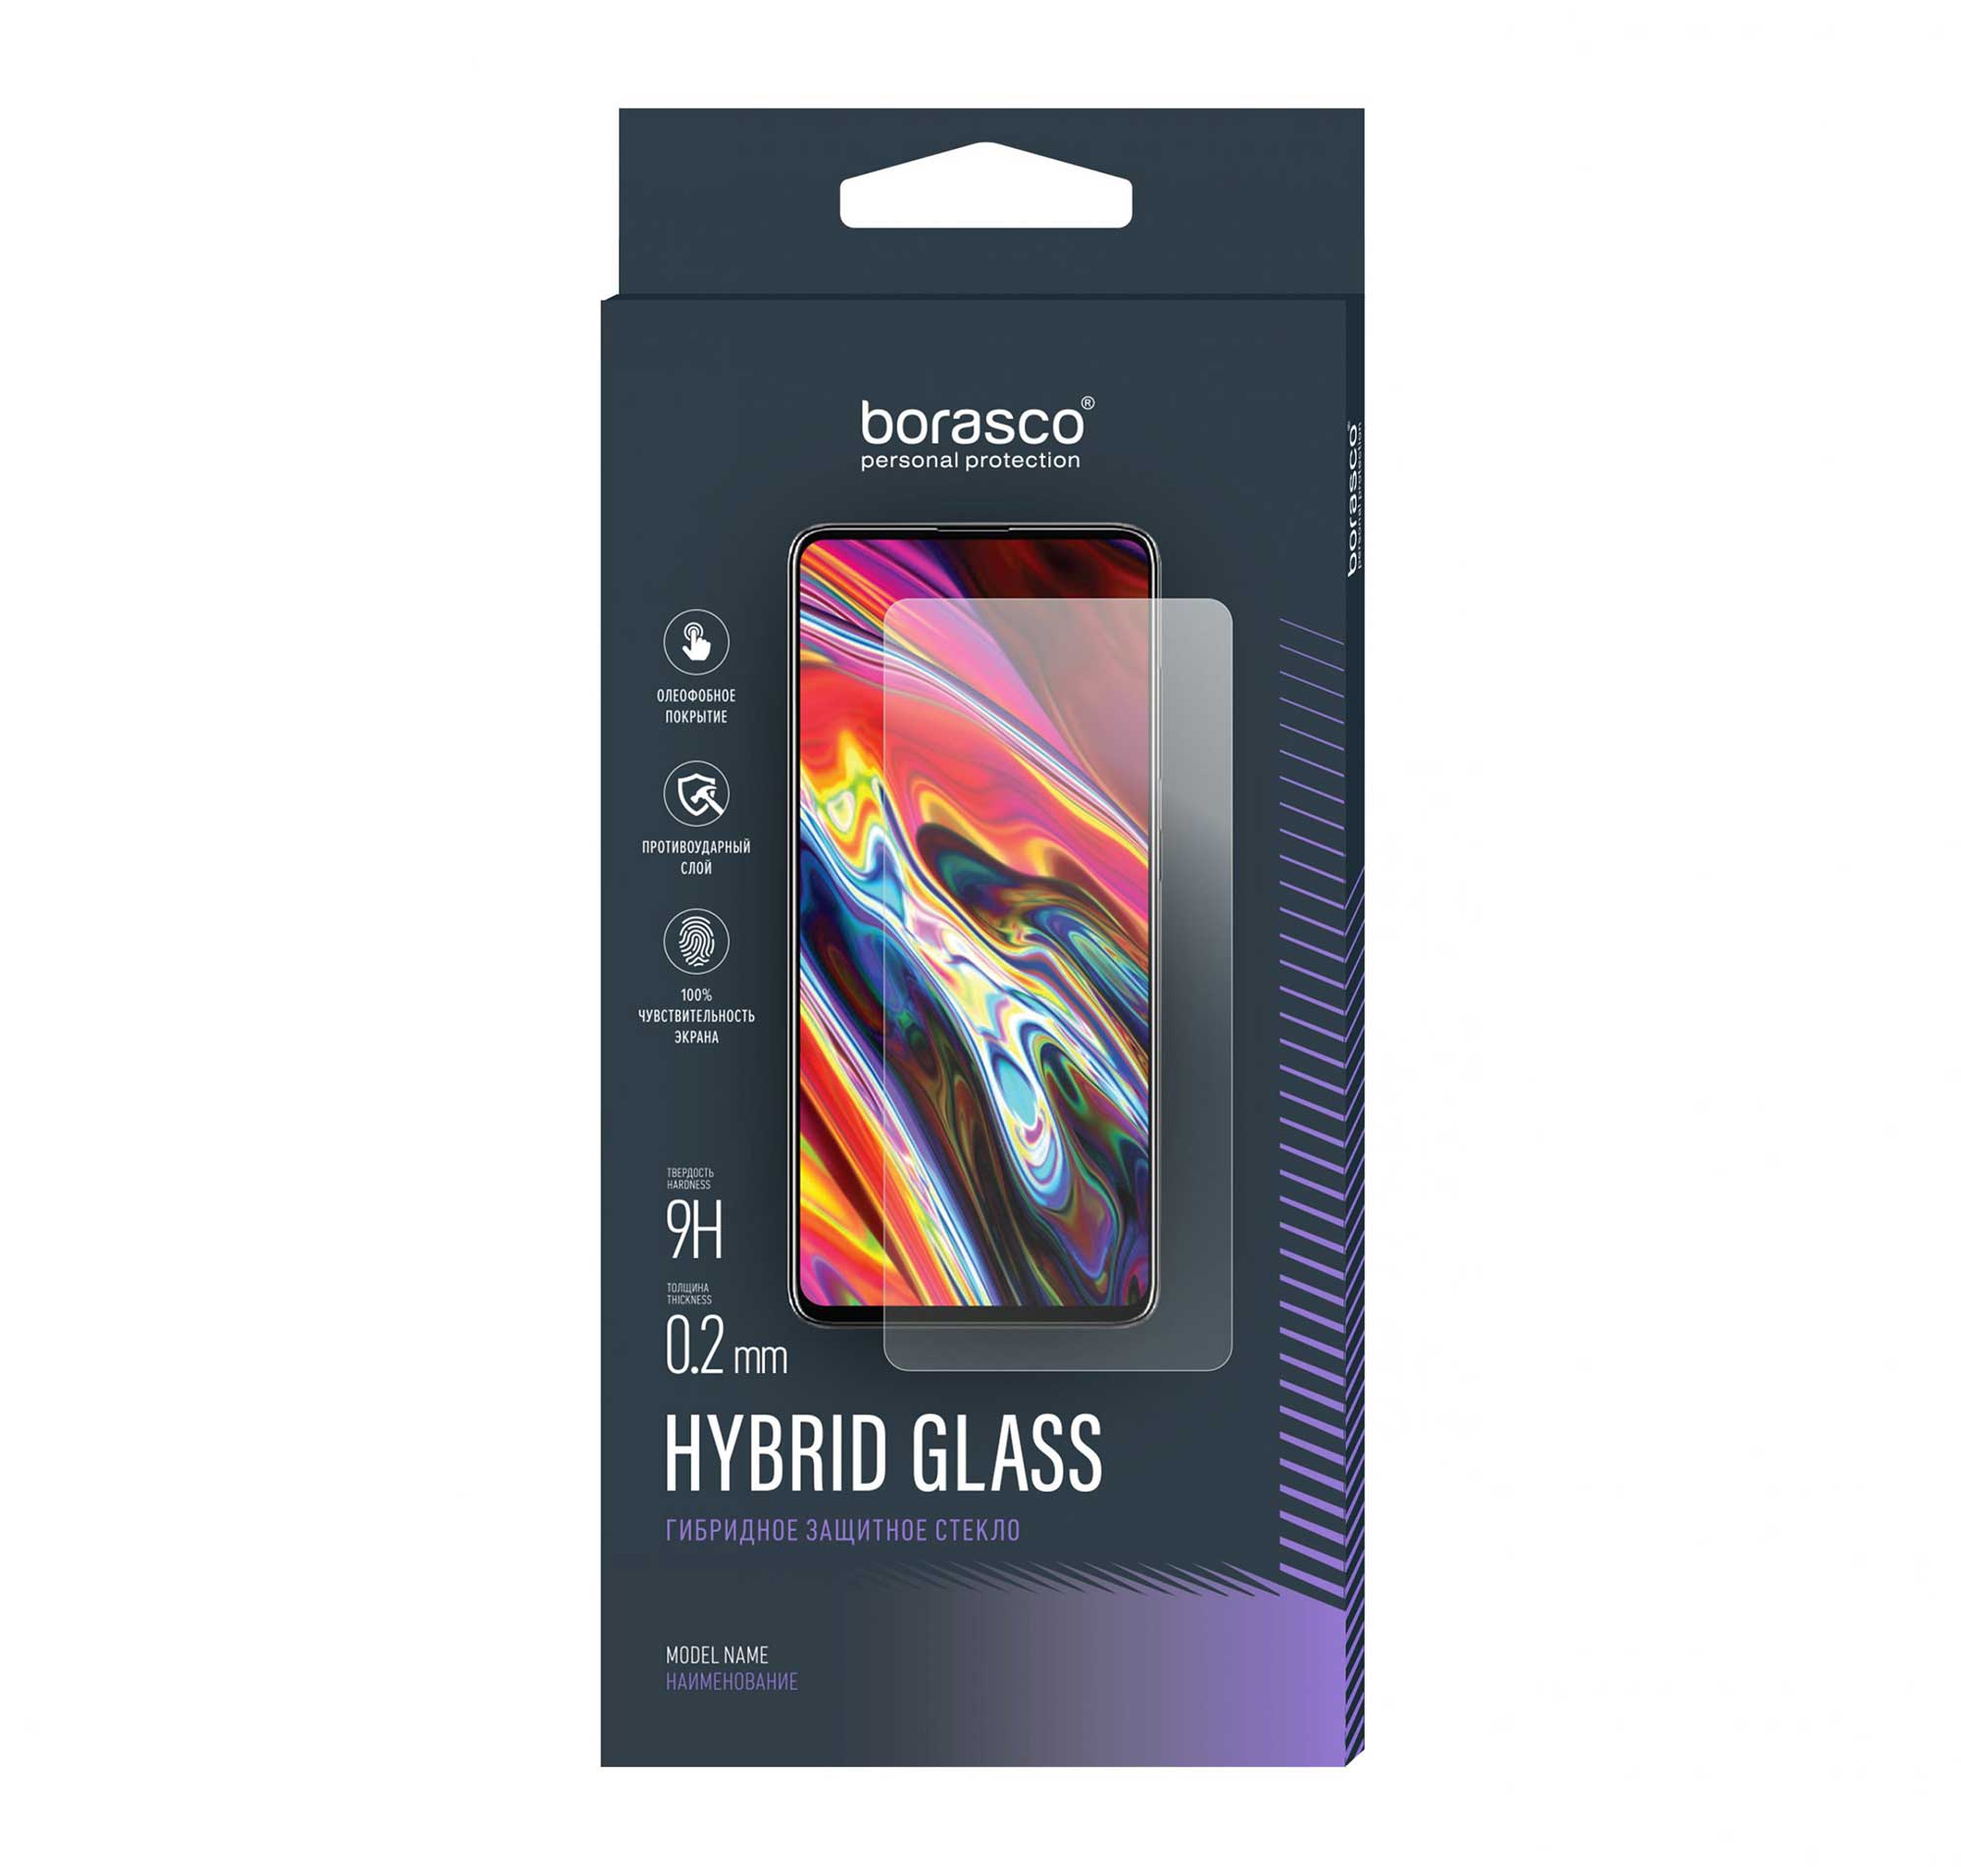 Защитное стекло Hybrid Glass для Itel A48 защитное стекло hybrid glass для itel a25